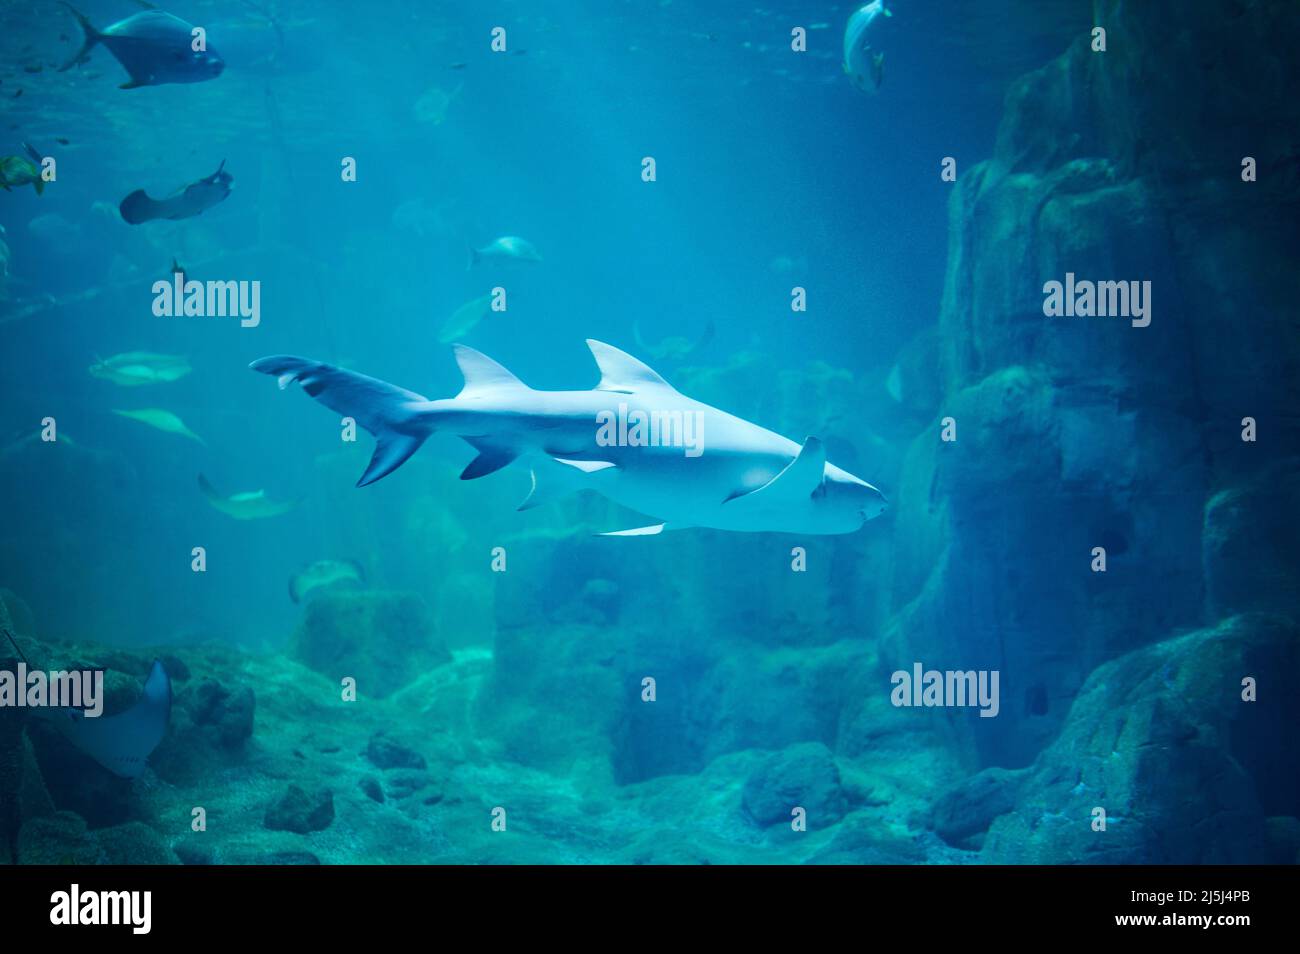 Shark swim in big aquarium with clean deep blue water Stock Photo